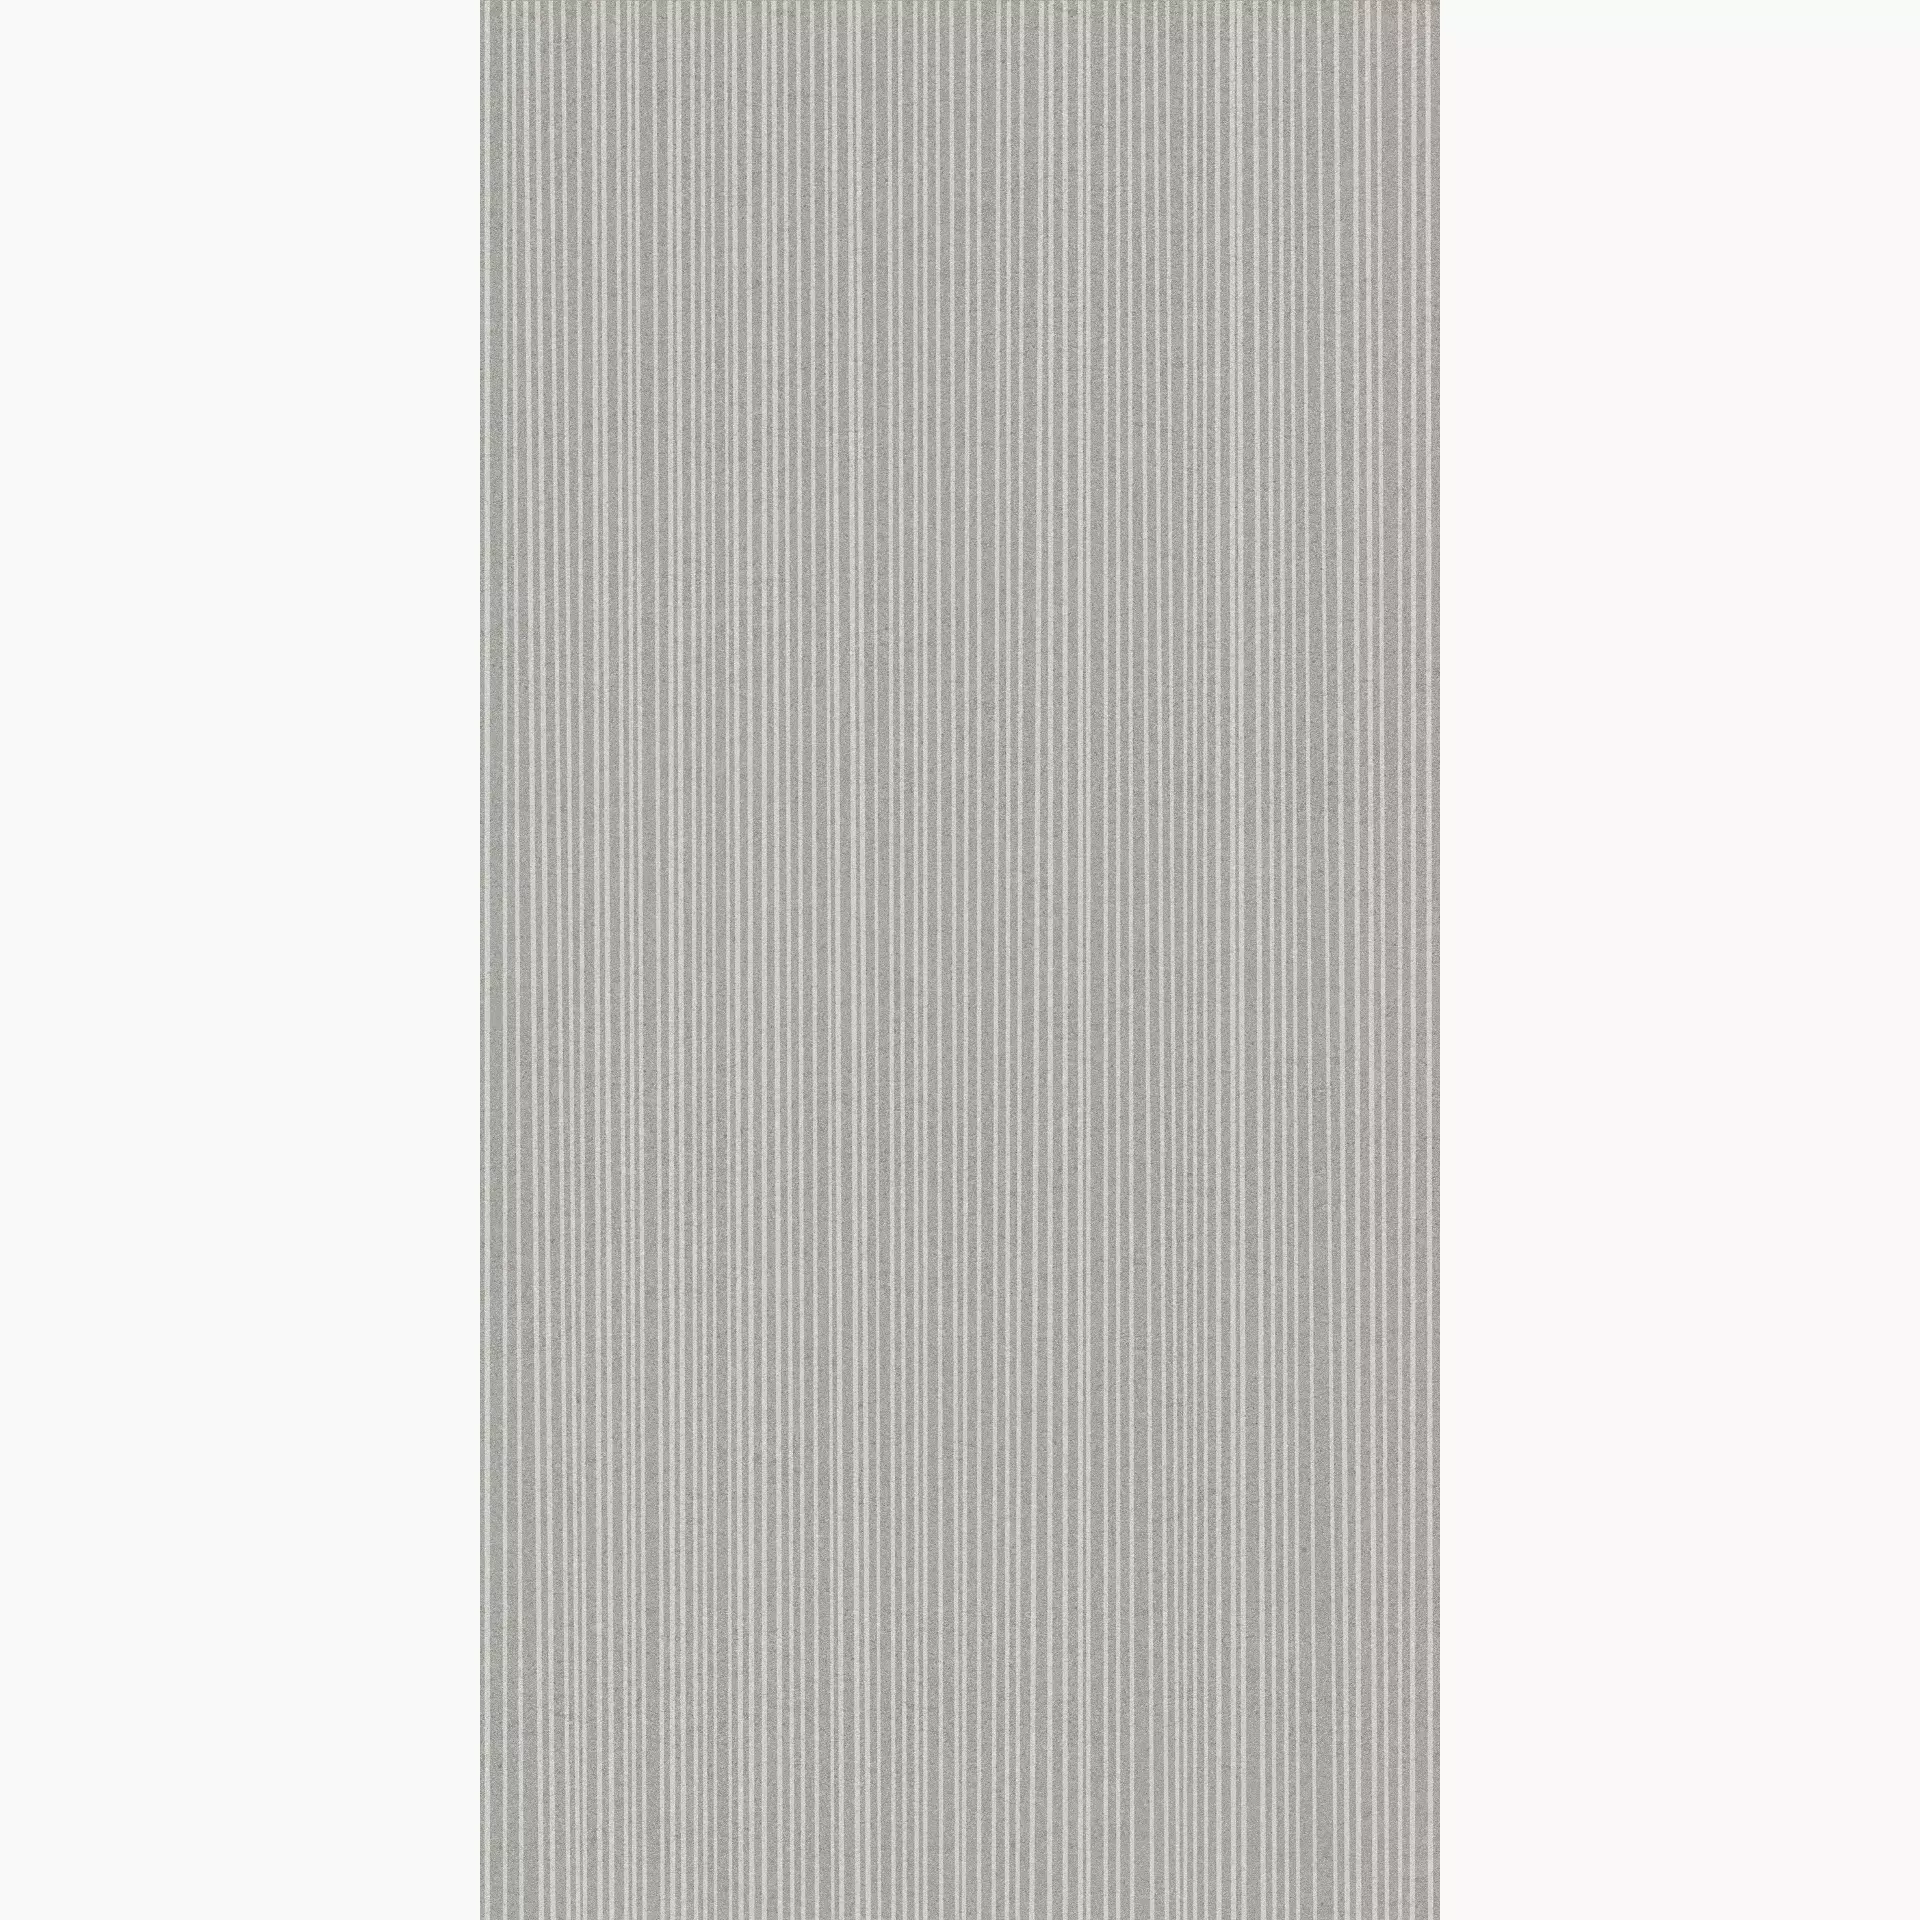 Coem Tweed Stone Grey Naturale 0TW713R 75x149,7cm rectified 10mm